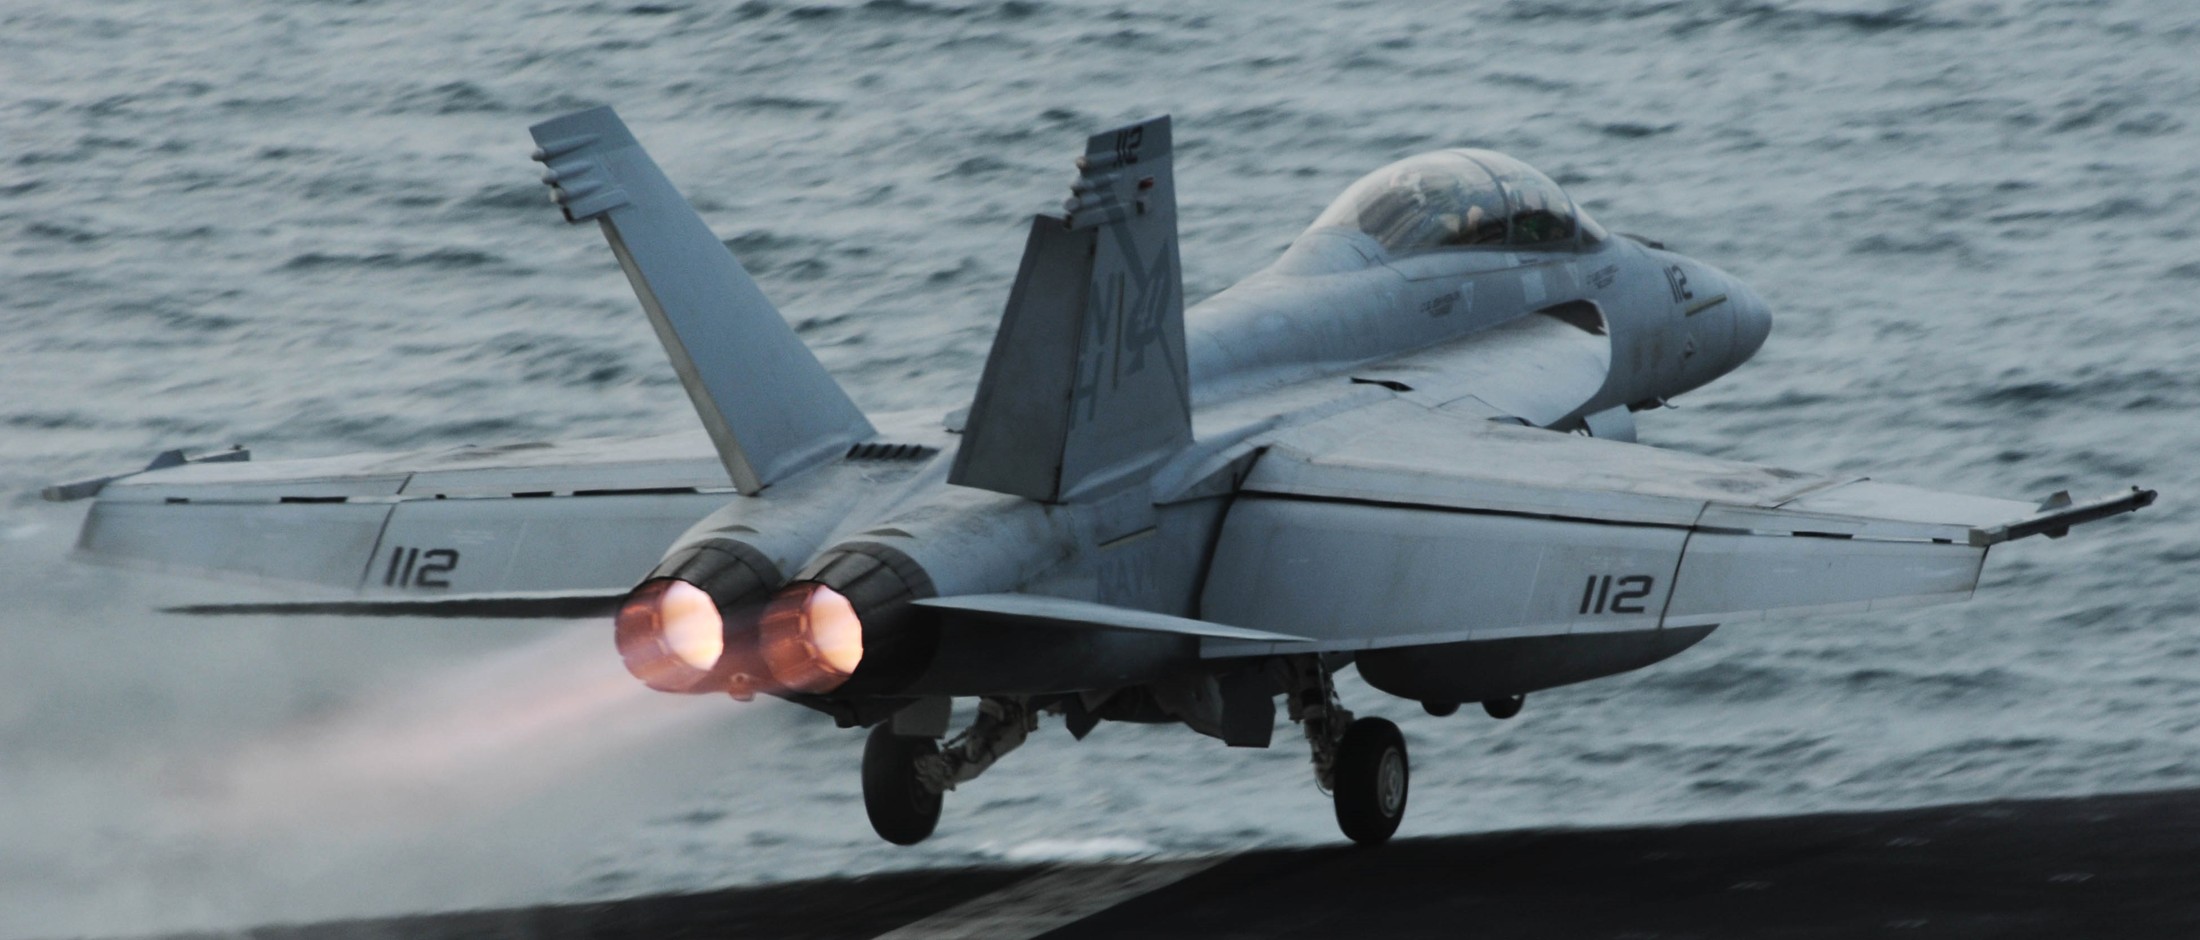 vfa-41 black aces strike fighter squadron f/a-18f super hornet cvw-11 cvn-68 uss nimitz us navy 122p